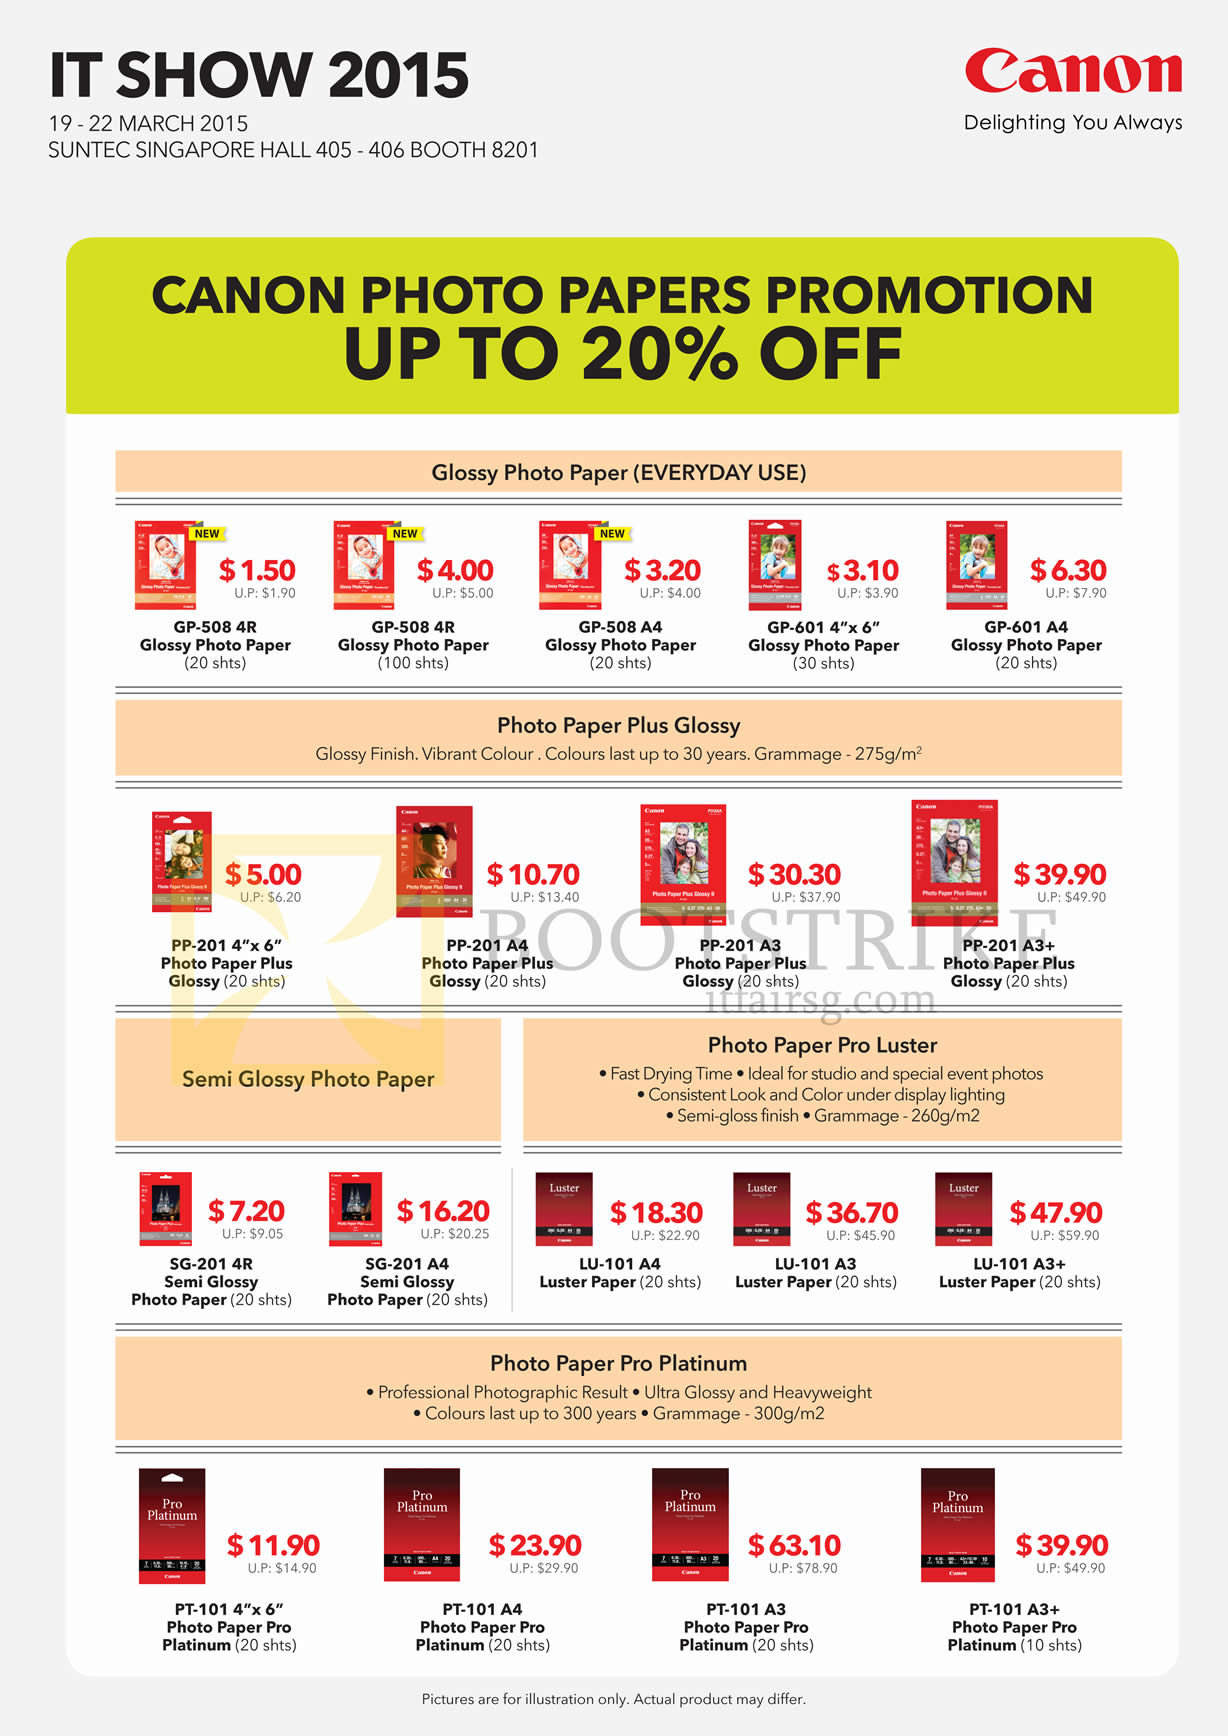 IT SHOW 2015 price list image brochure of Canon Photo Papers, Glossy Photo Paper, Photo Paper Plus Glossy, Semi Glossy Photo Paper, Photo Paper Pro Luster, Photo Paper Pro Platinum